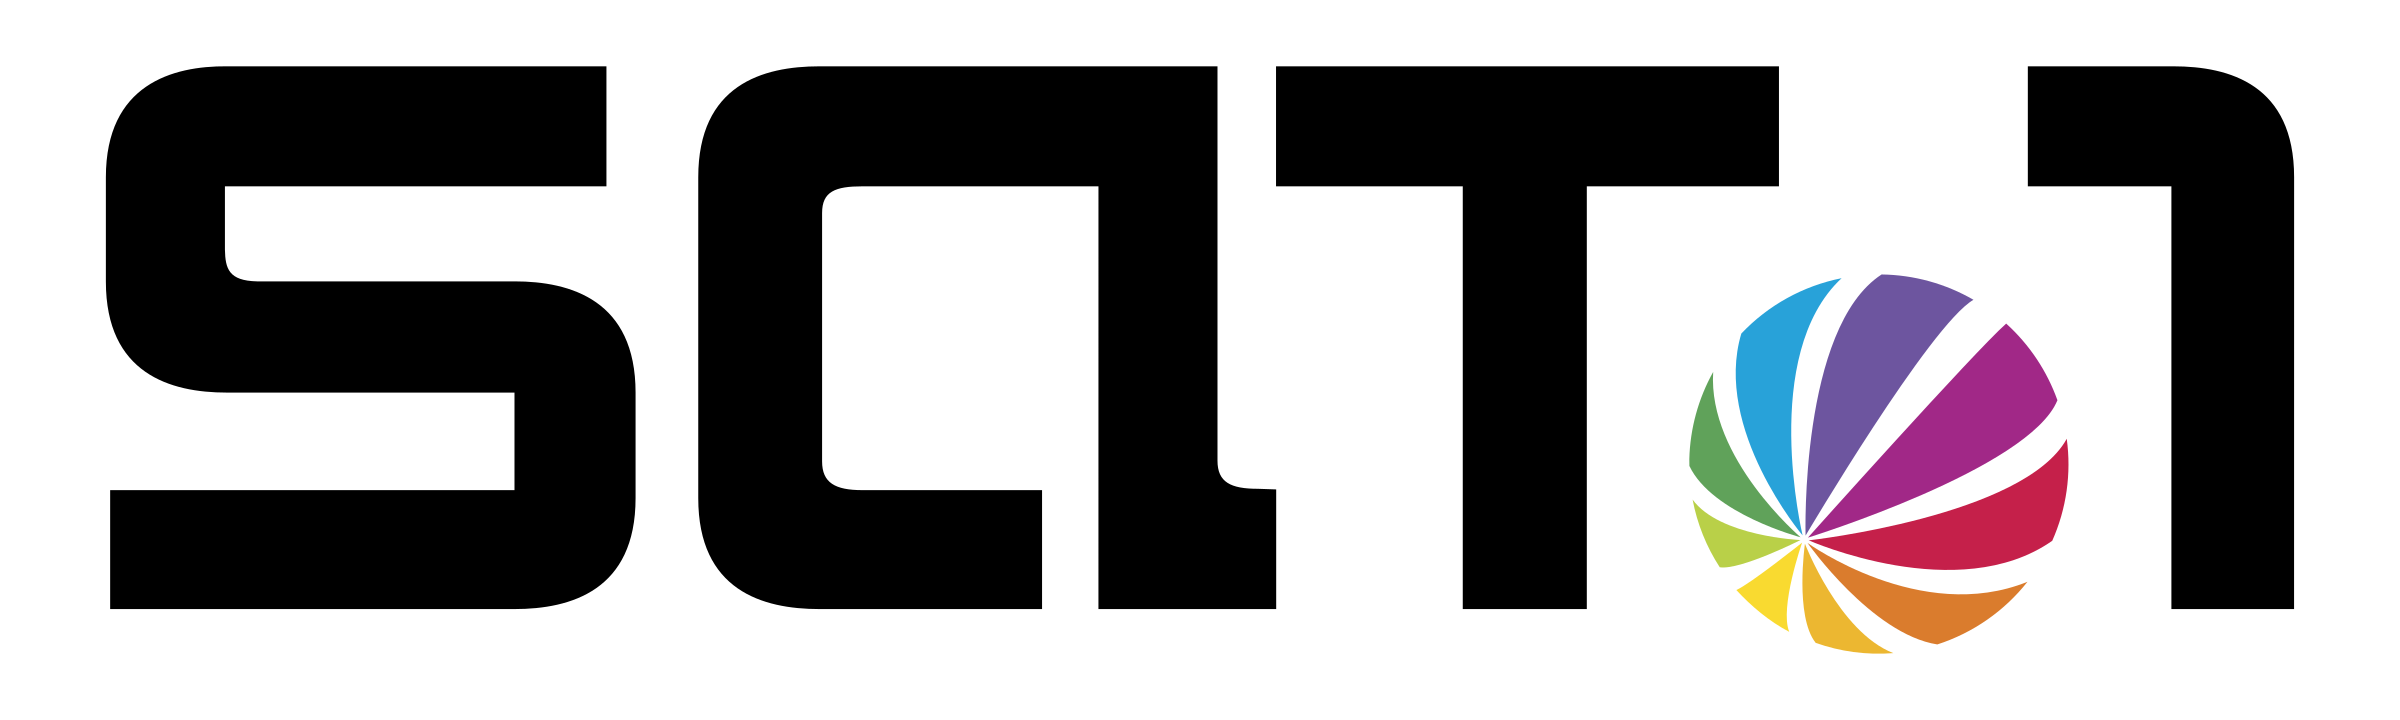 sat-1-logo-png-transparent copy